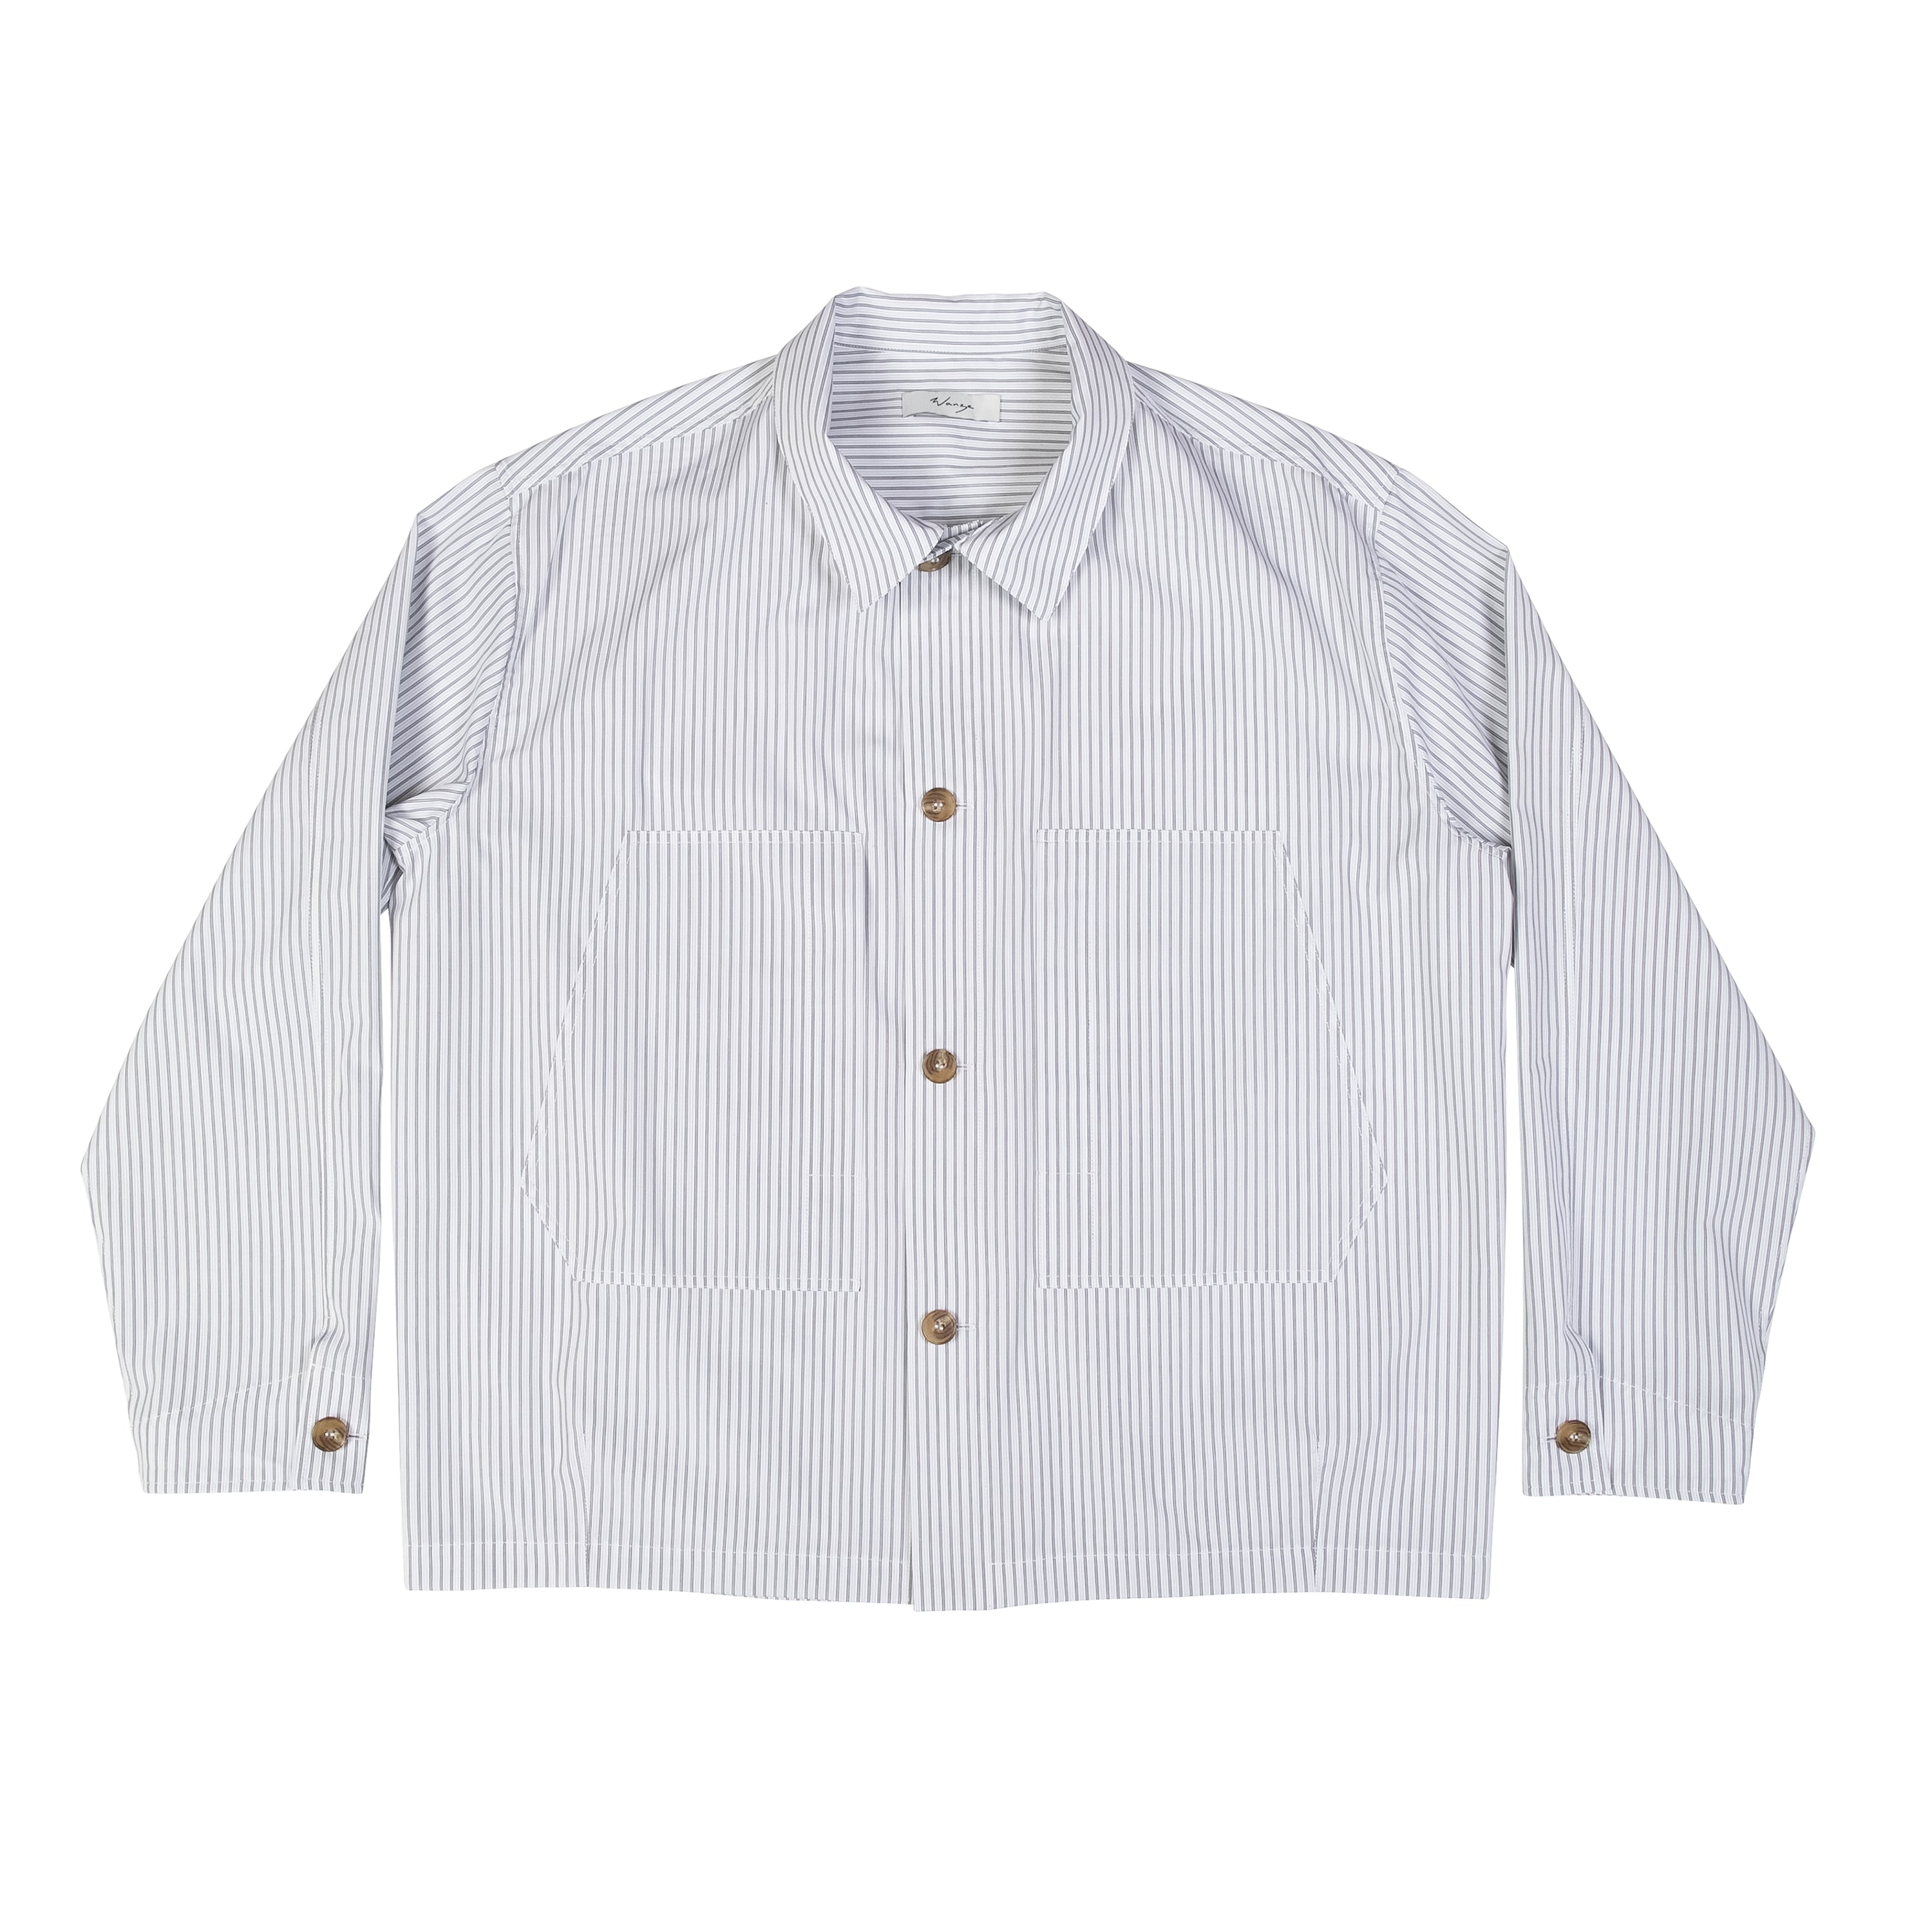 Chore Shirt Cotton Poplin Stripe - PREORDER